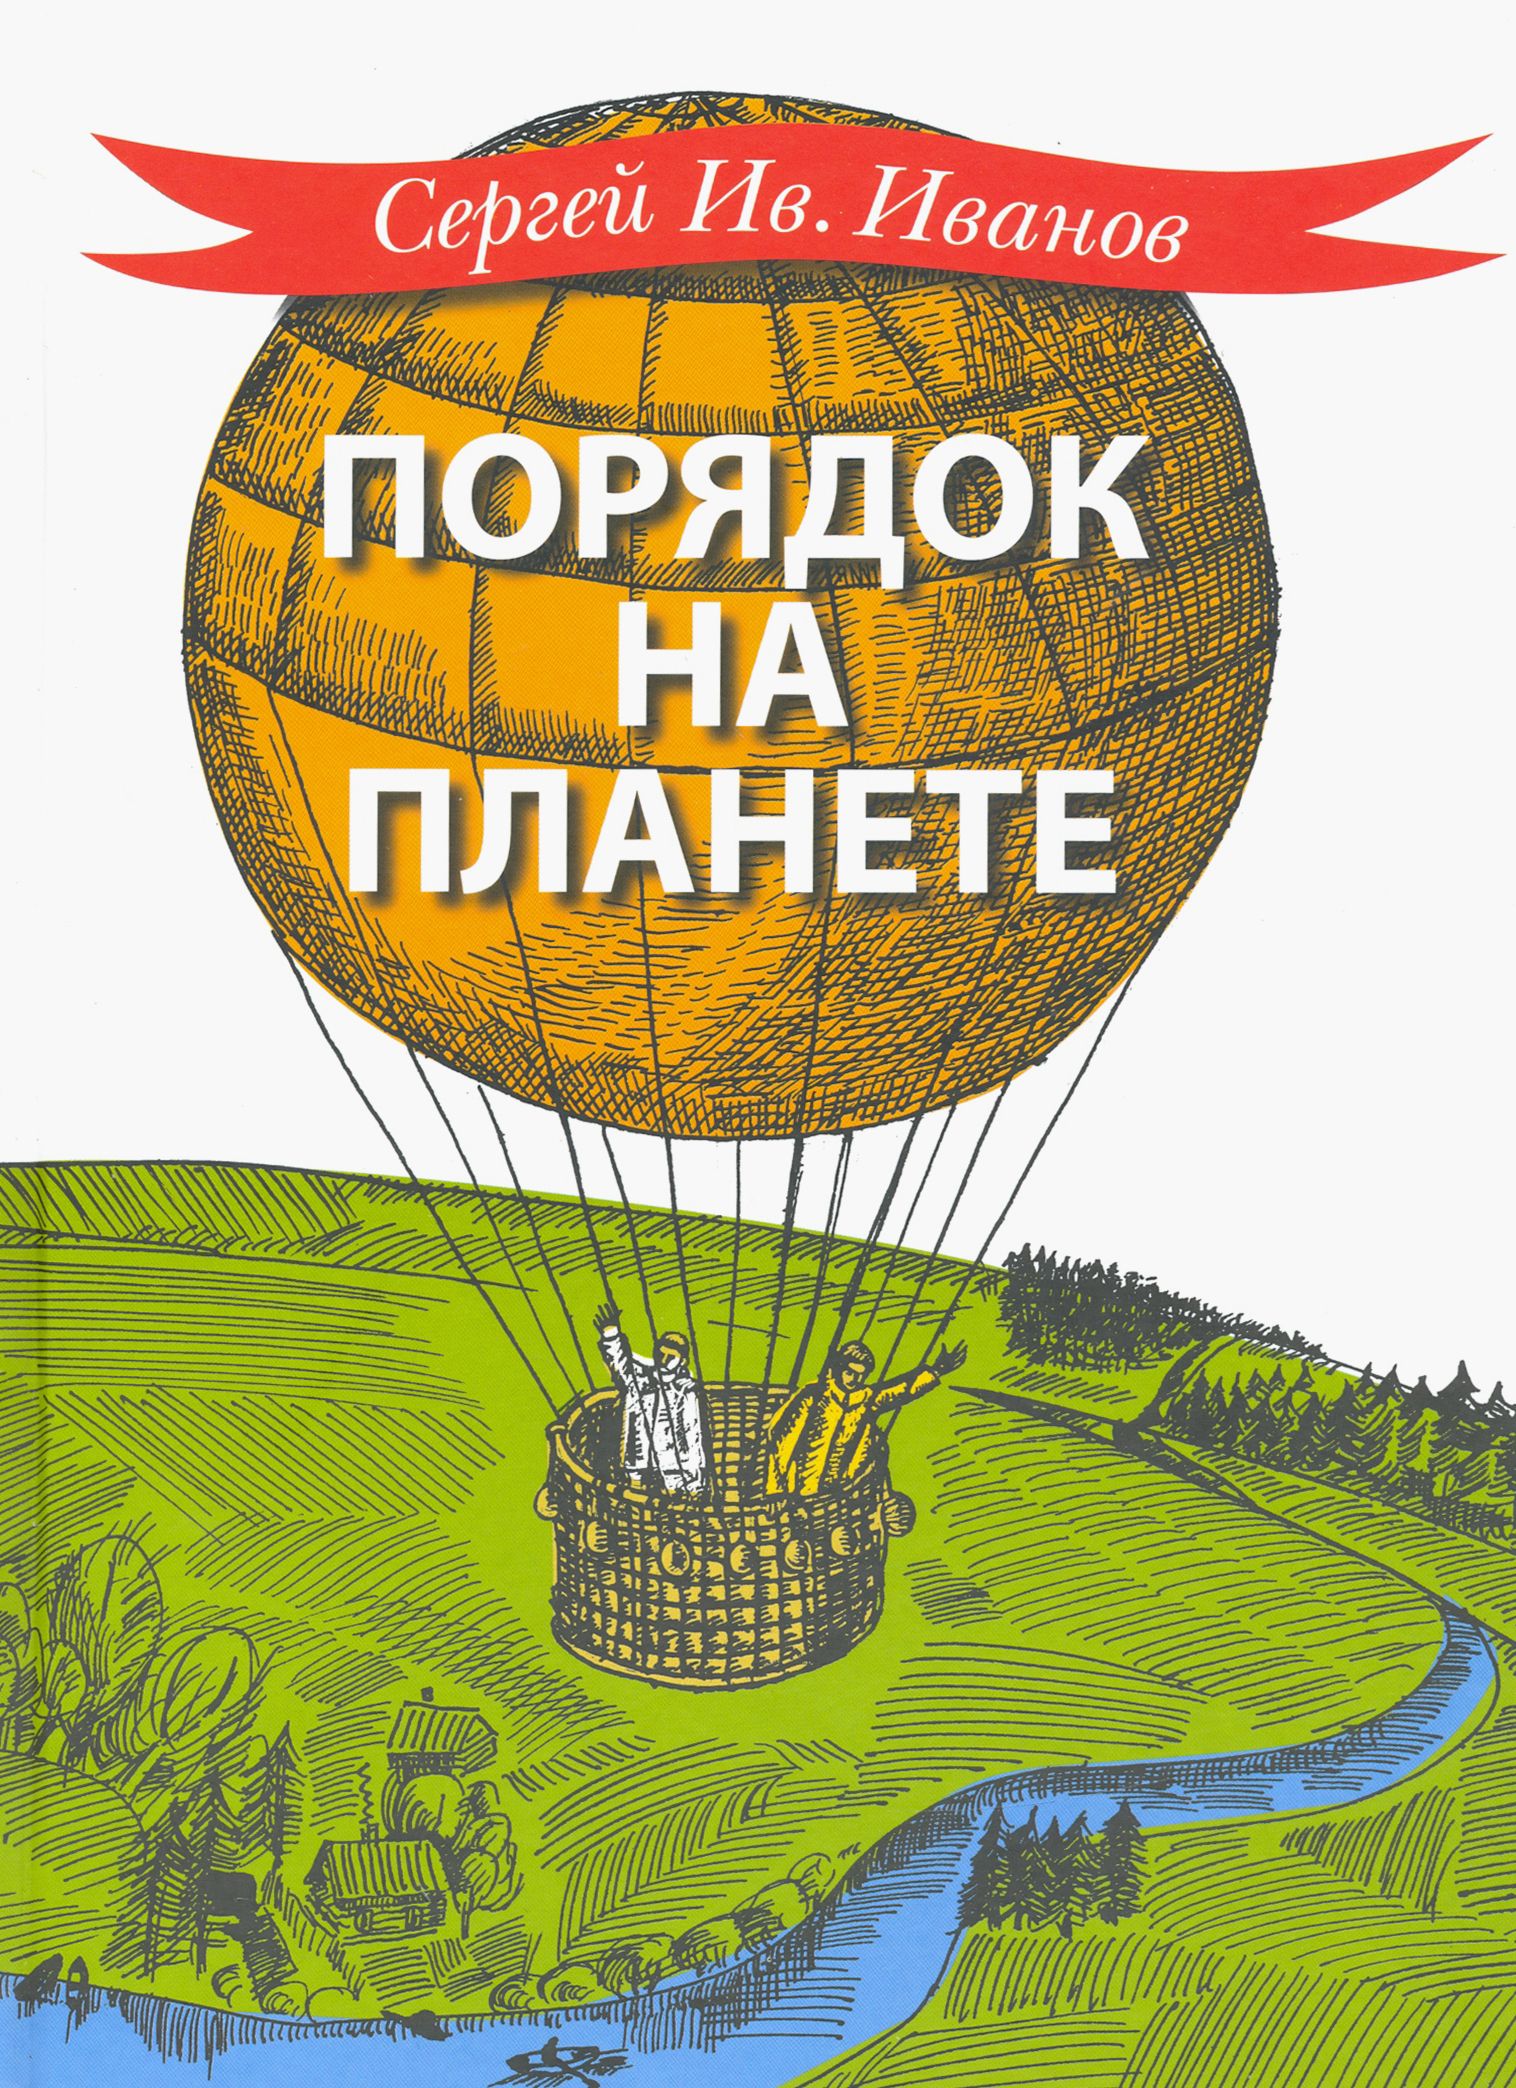 Книга планета сергеев. ISBN 978-5-98736-063-7.